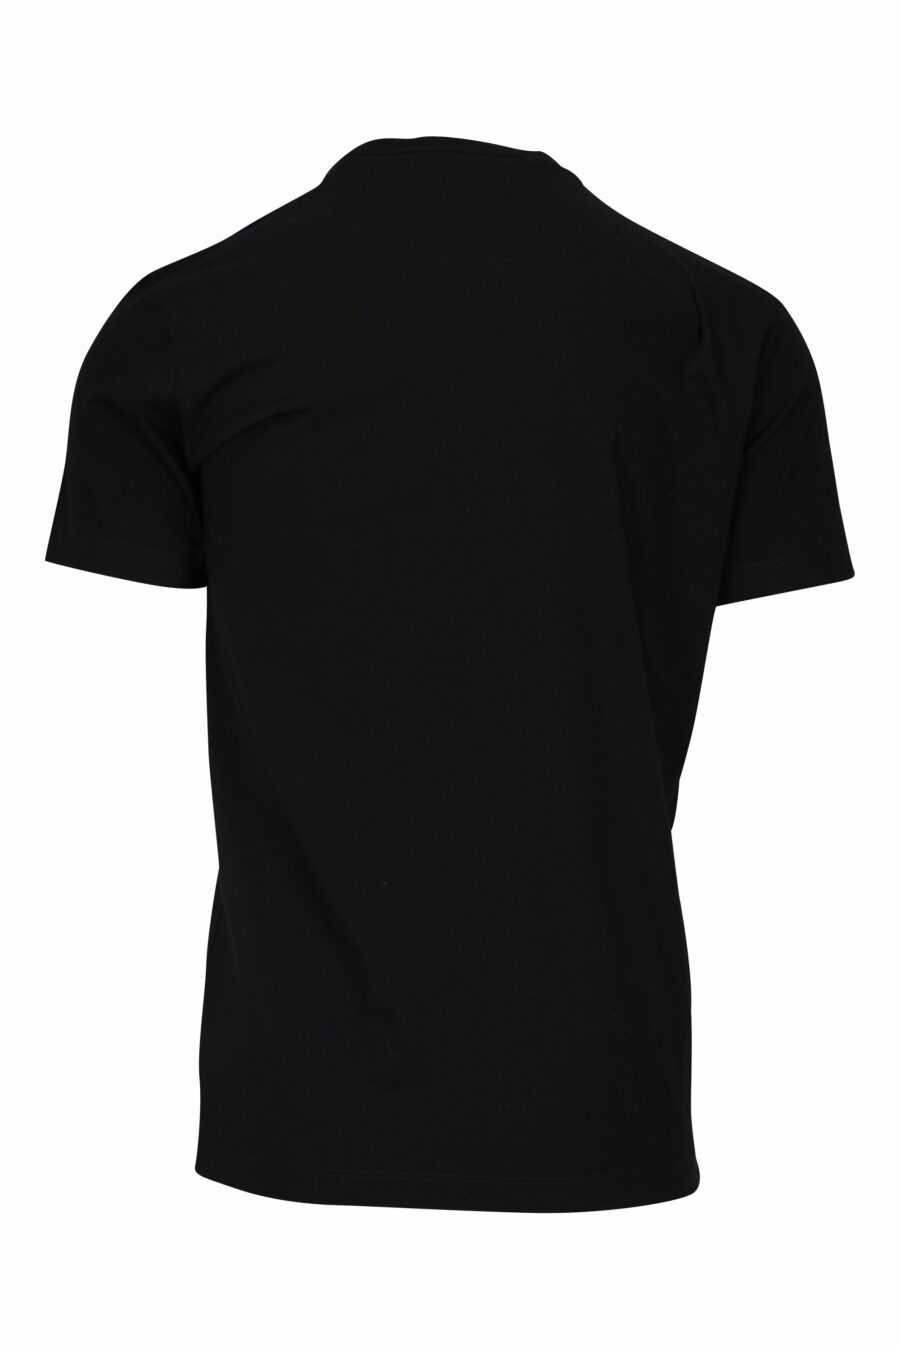 T-shirt noir avec maxilogo "sitckers" - 8054148086725 1